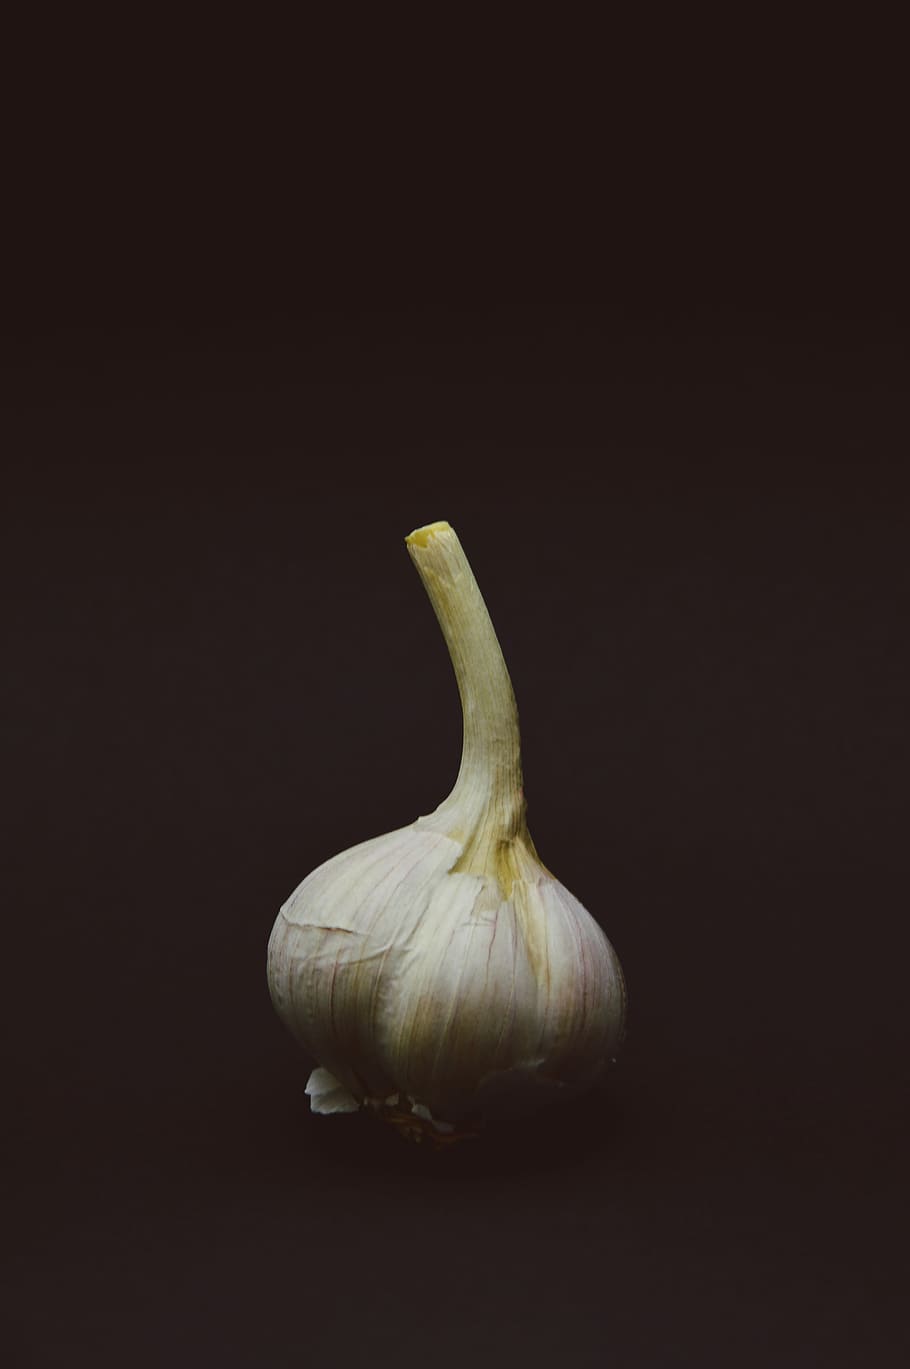 simplistic garlic, Simplistic, garlic, minimalistic, vegetable, vegetables, food, spice, freshness, organic